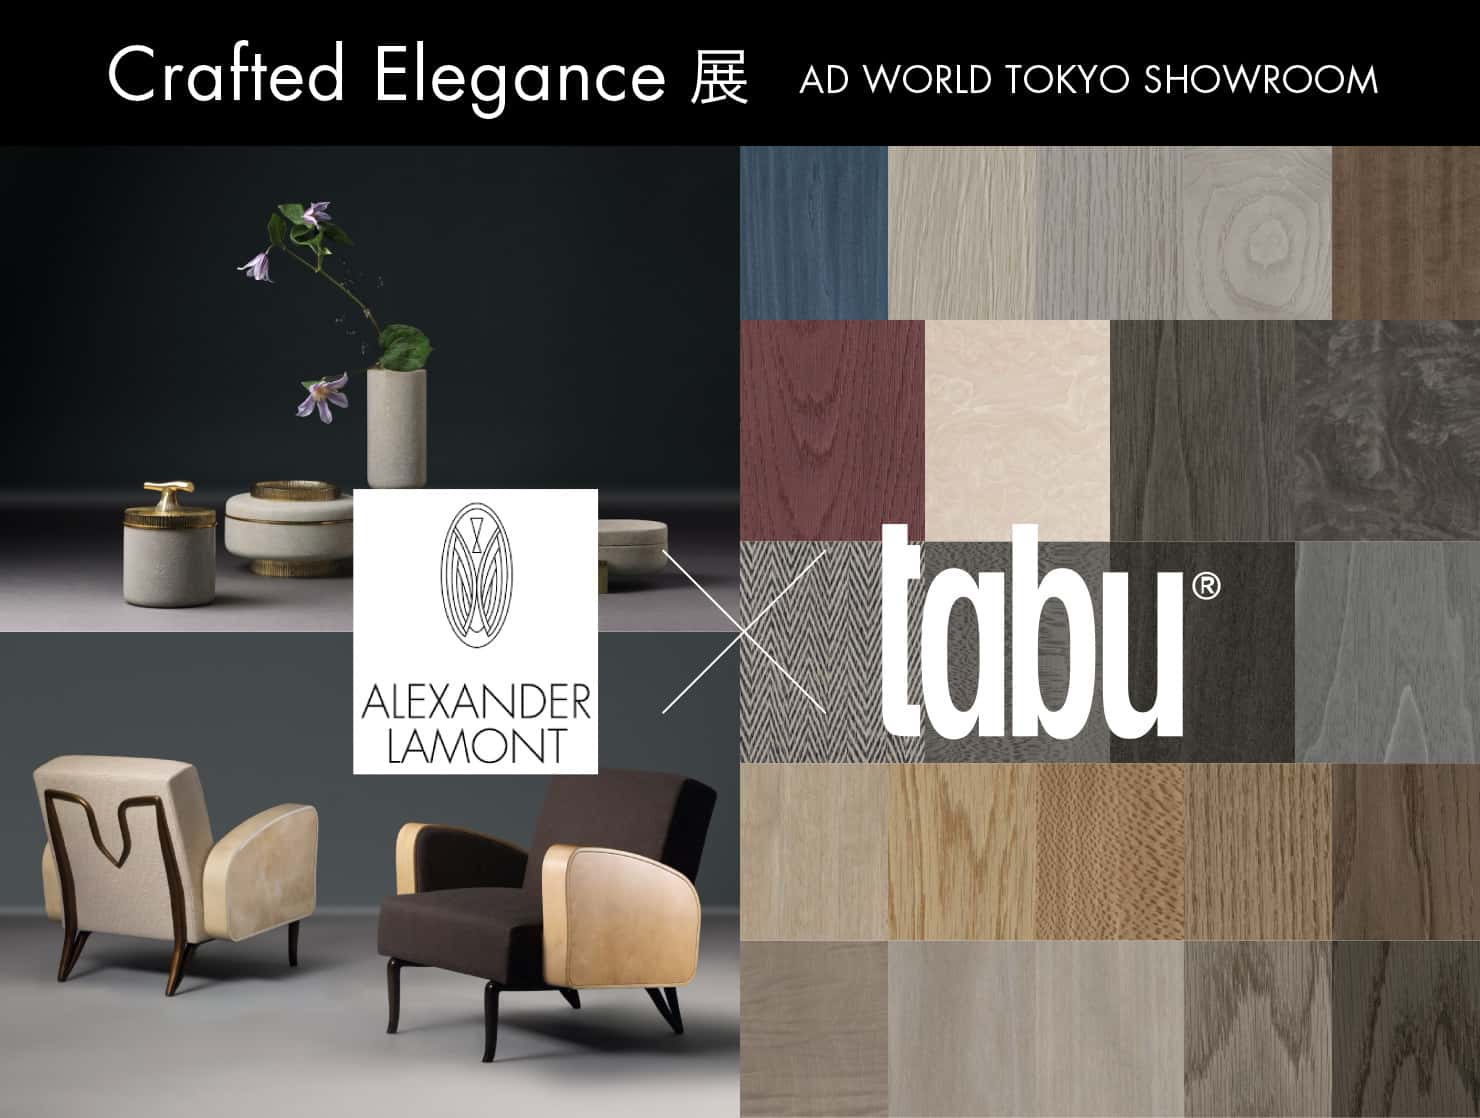 Crafted Elegance W AD WORLD TOKYO SHOWROOM ALEXANDER LAMONT ~ tabu